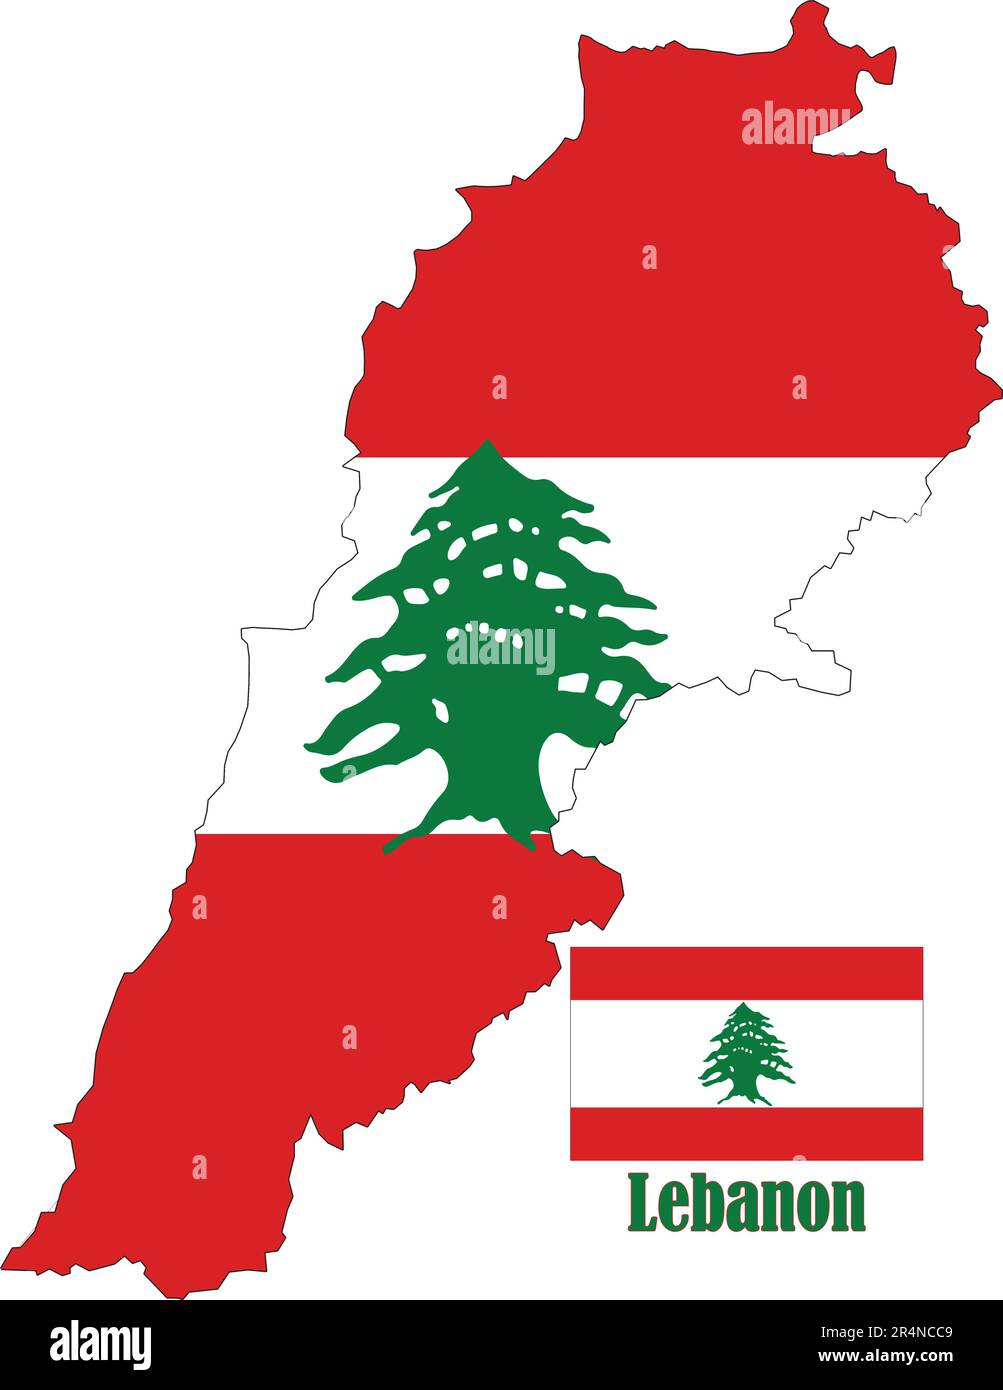 Lebanon Map and Flag Stock Vector